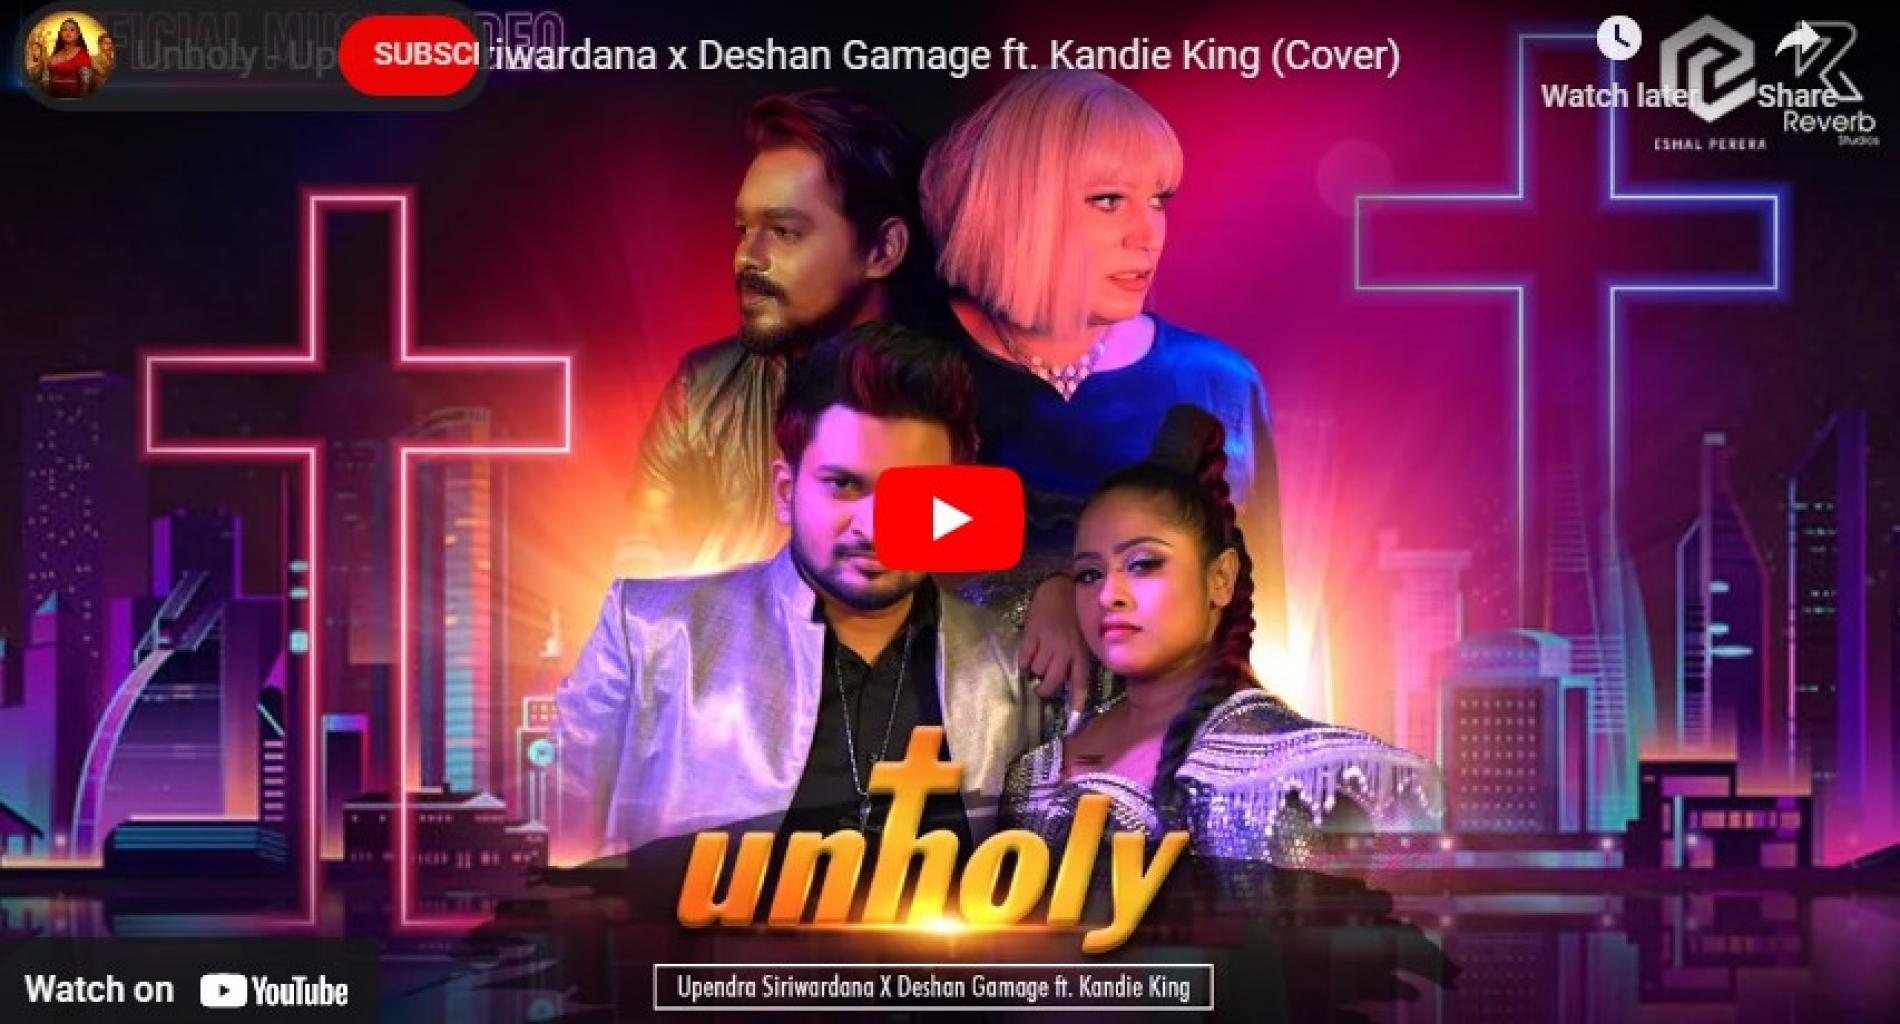 New Music : Unholy – Upendra Siriwardana x Deshan Gamage ft. Kandie King (Cover)